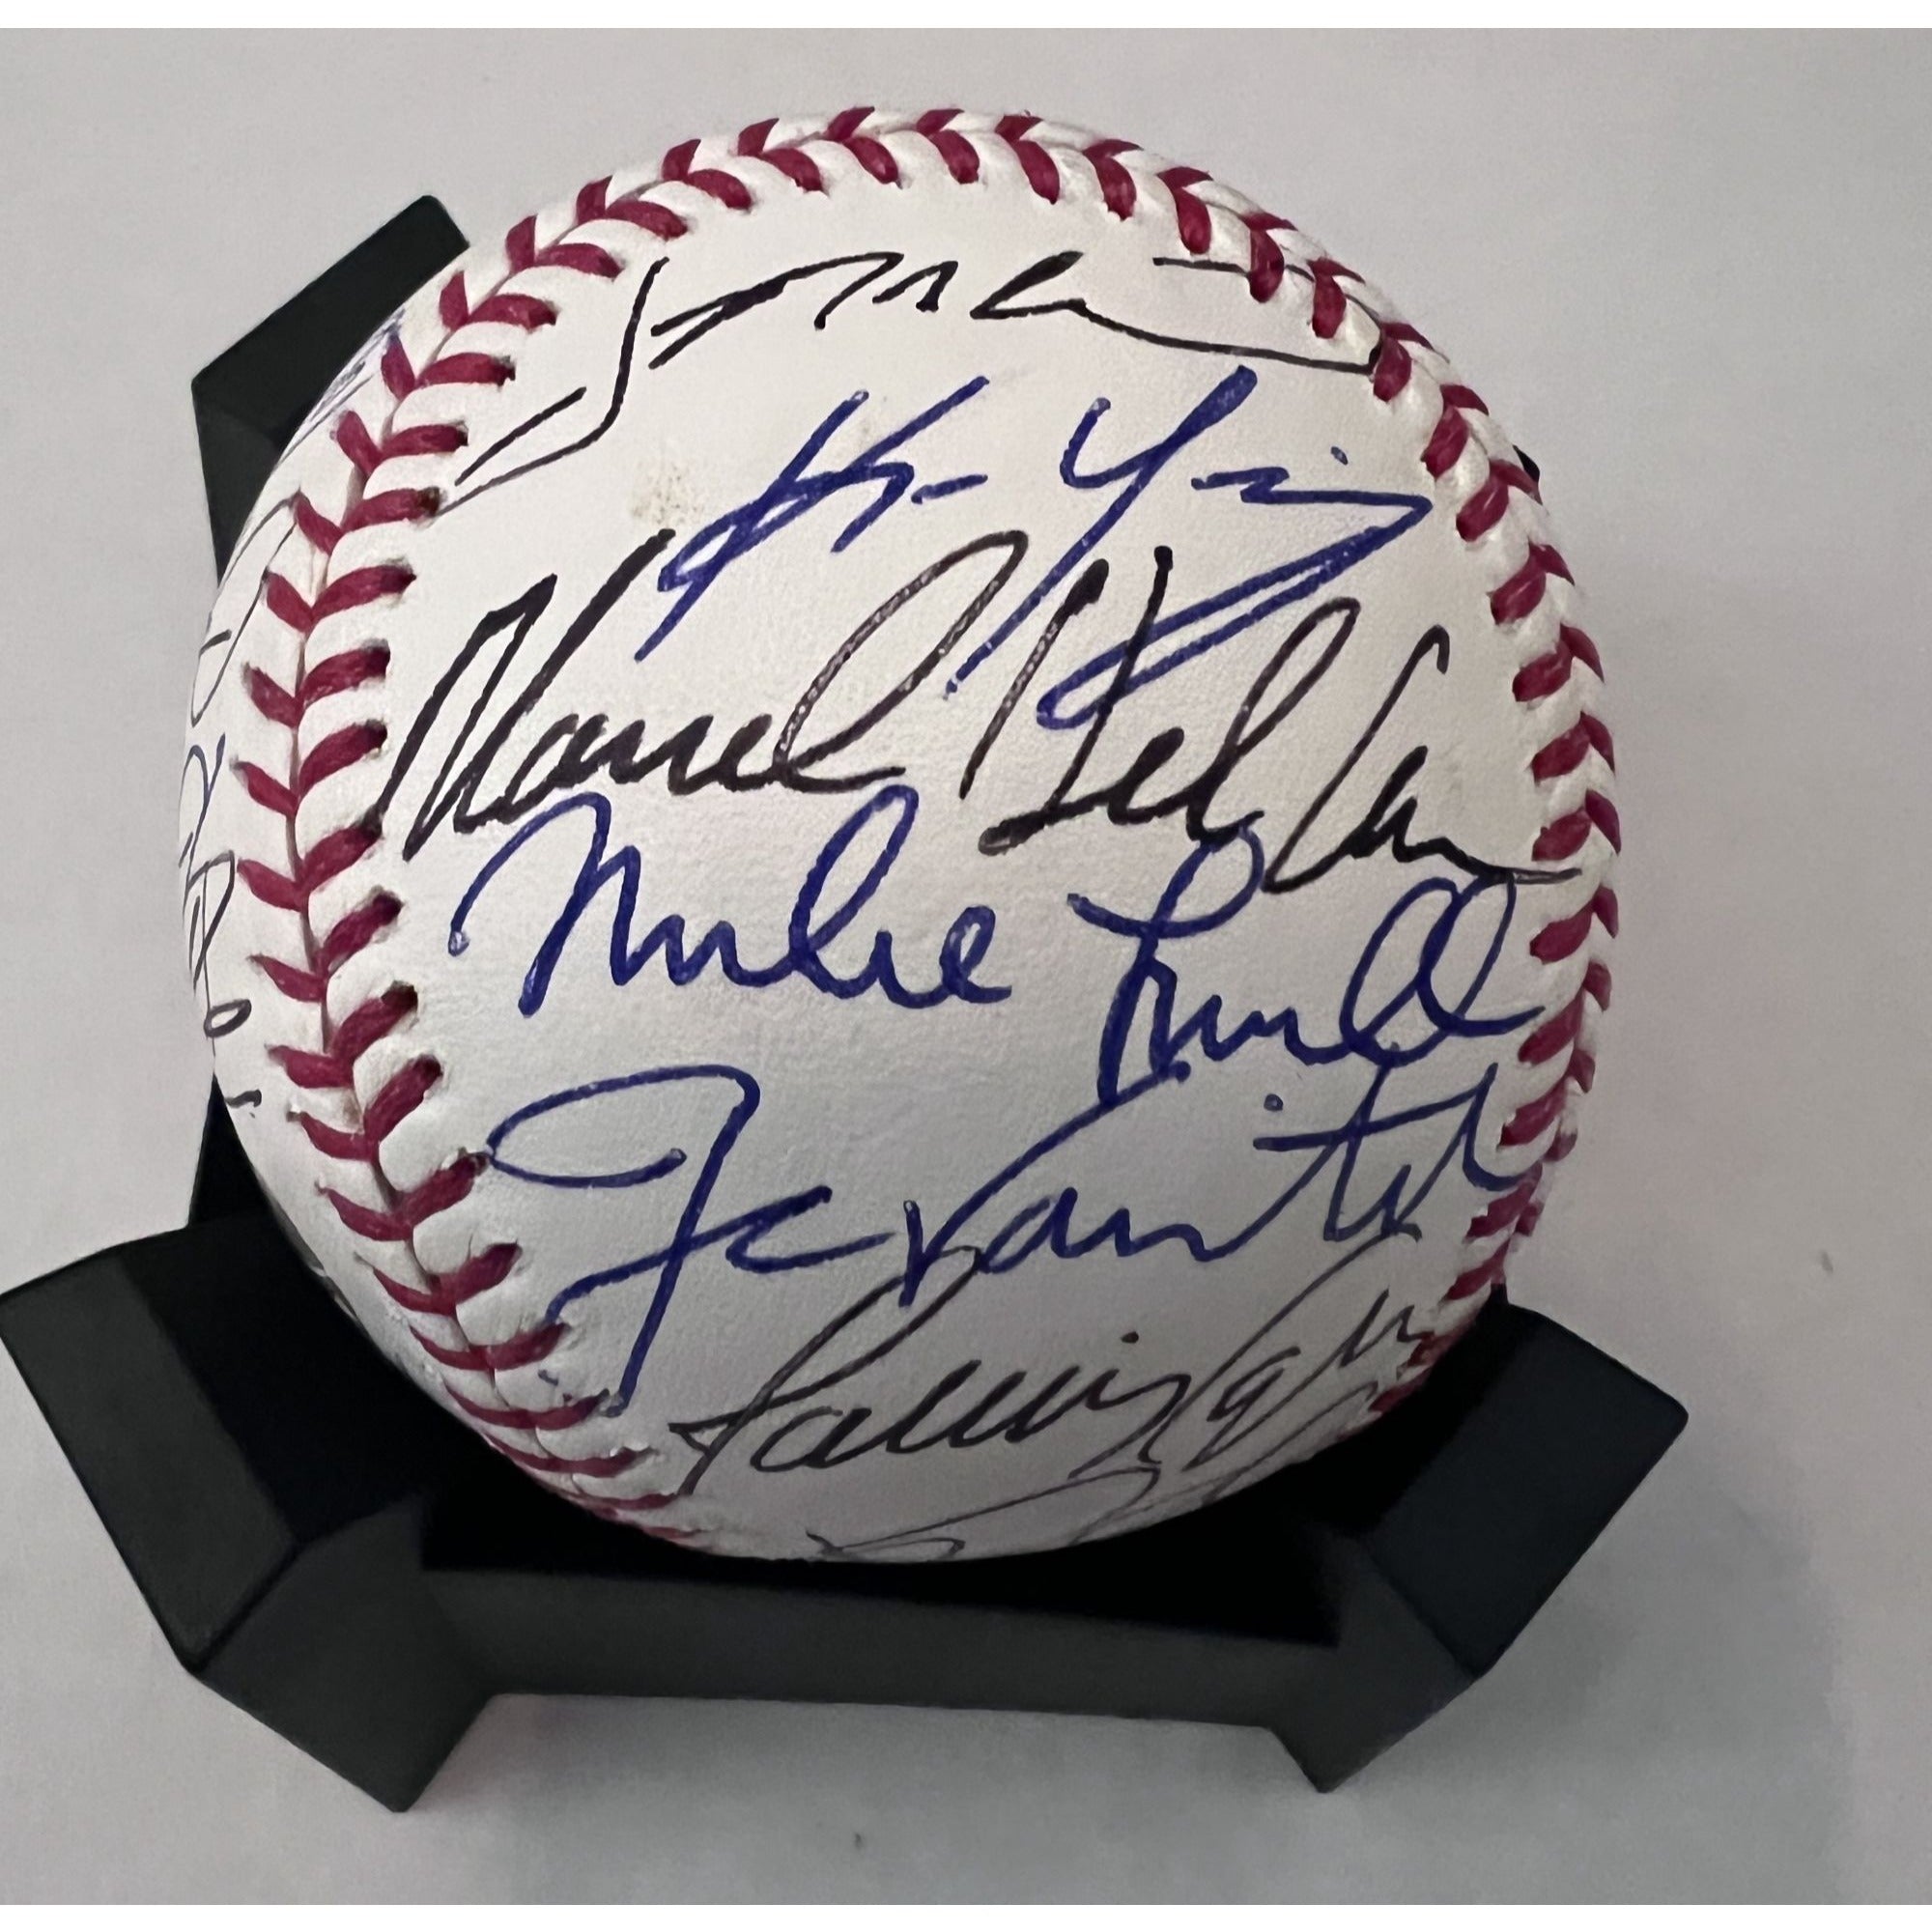 David Ortiz Manny Ramirez Dustin Pedroia 2007 Boston Red Sox world champions team signed baseball with proof $799